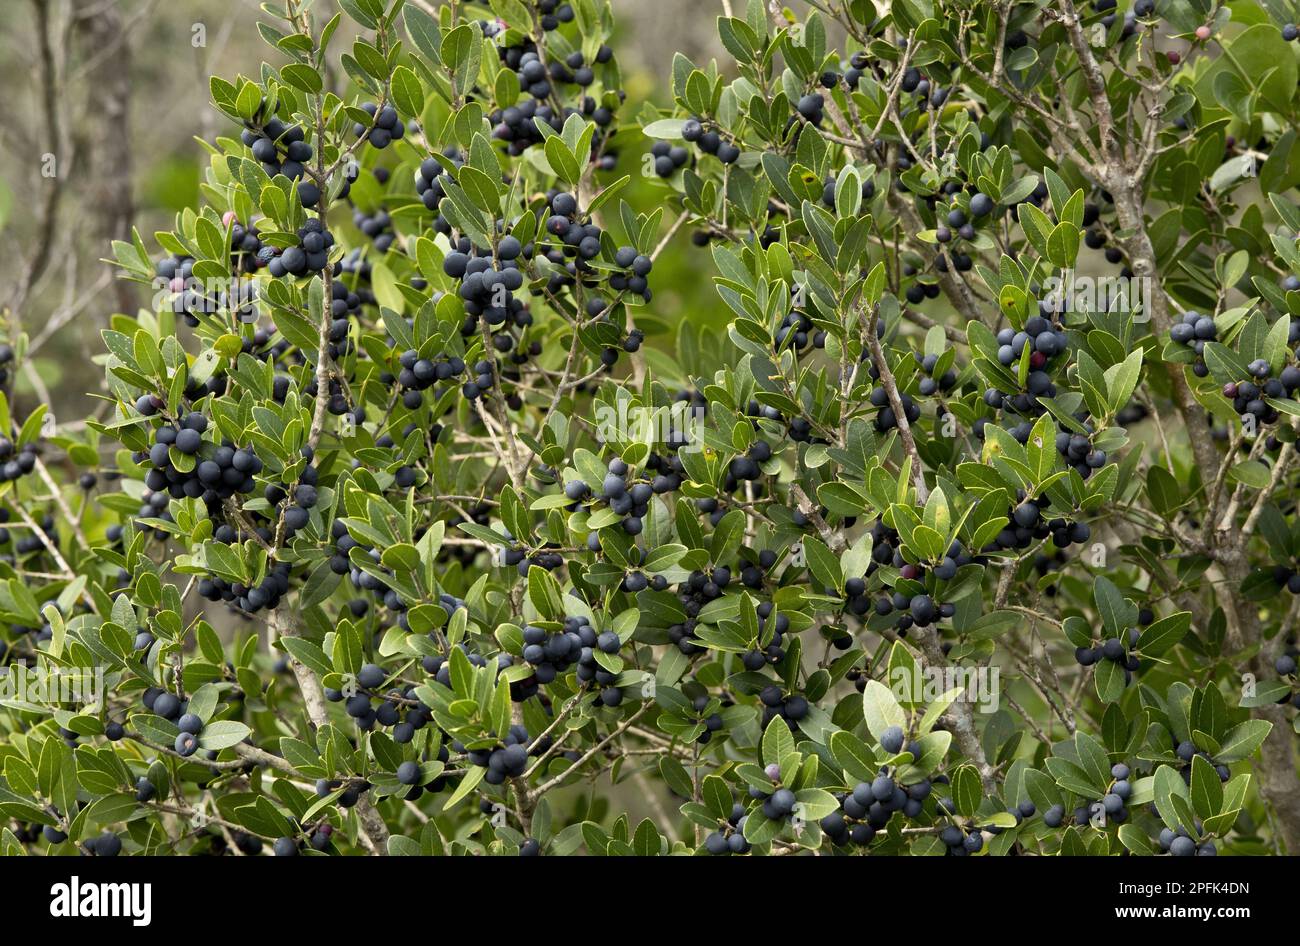 Biancospino, biancospino italiano, famiglia biancospino, biancospino mediterraneo (Rhamnus alaternus) nella frutta, Francia sud-occidentale Foto Stock